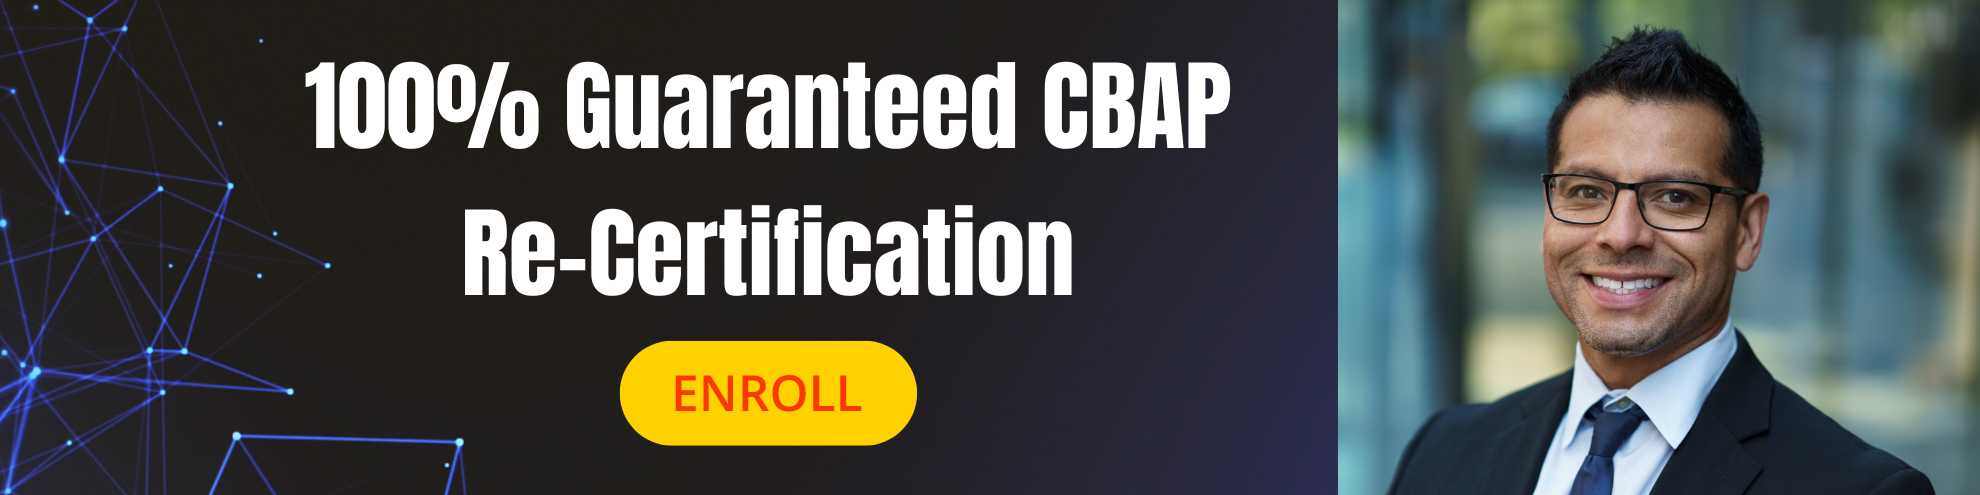 100% Guaranteed CBAP Re-certification